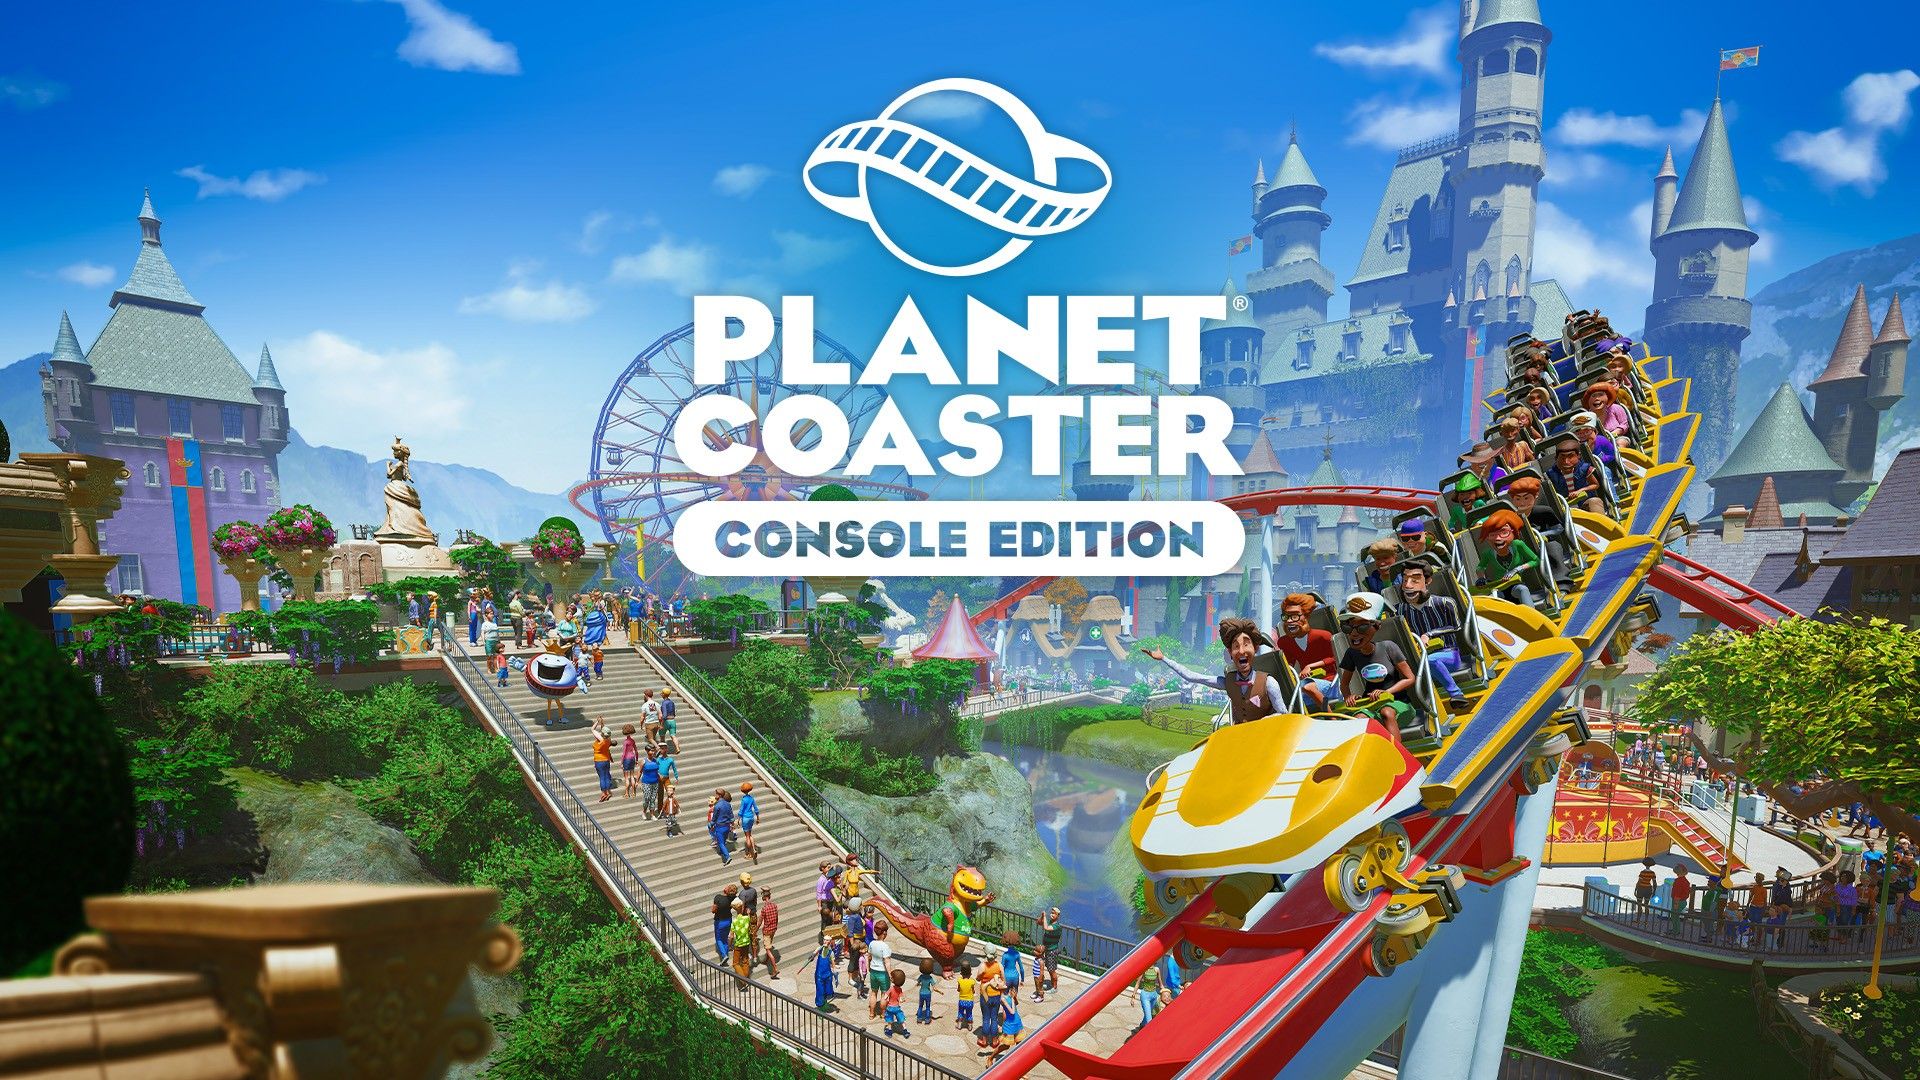 Planet Coaster: Console Edition